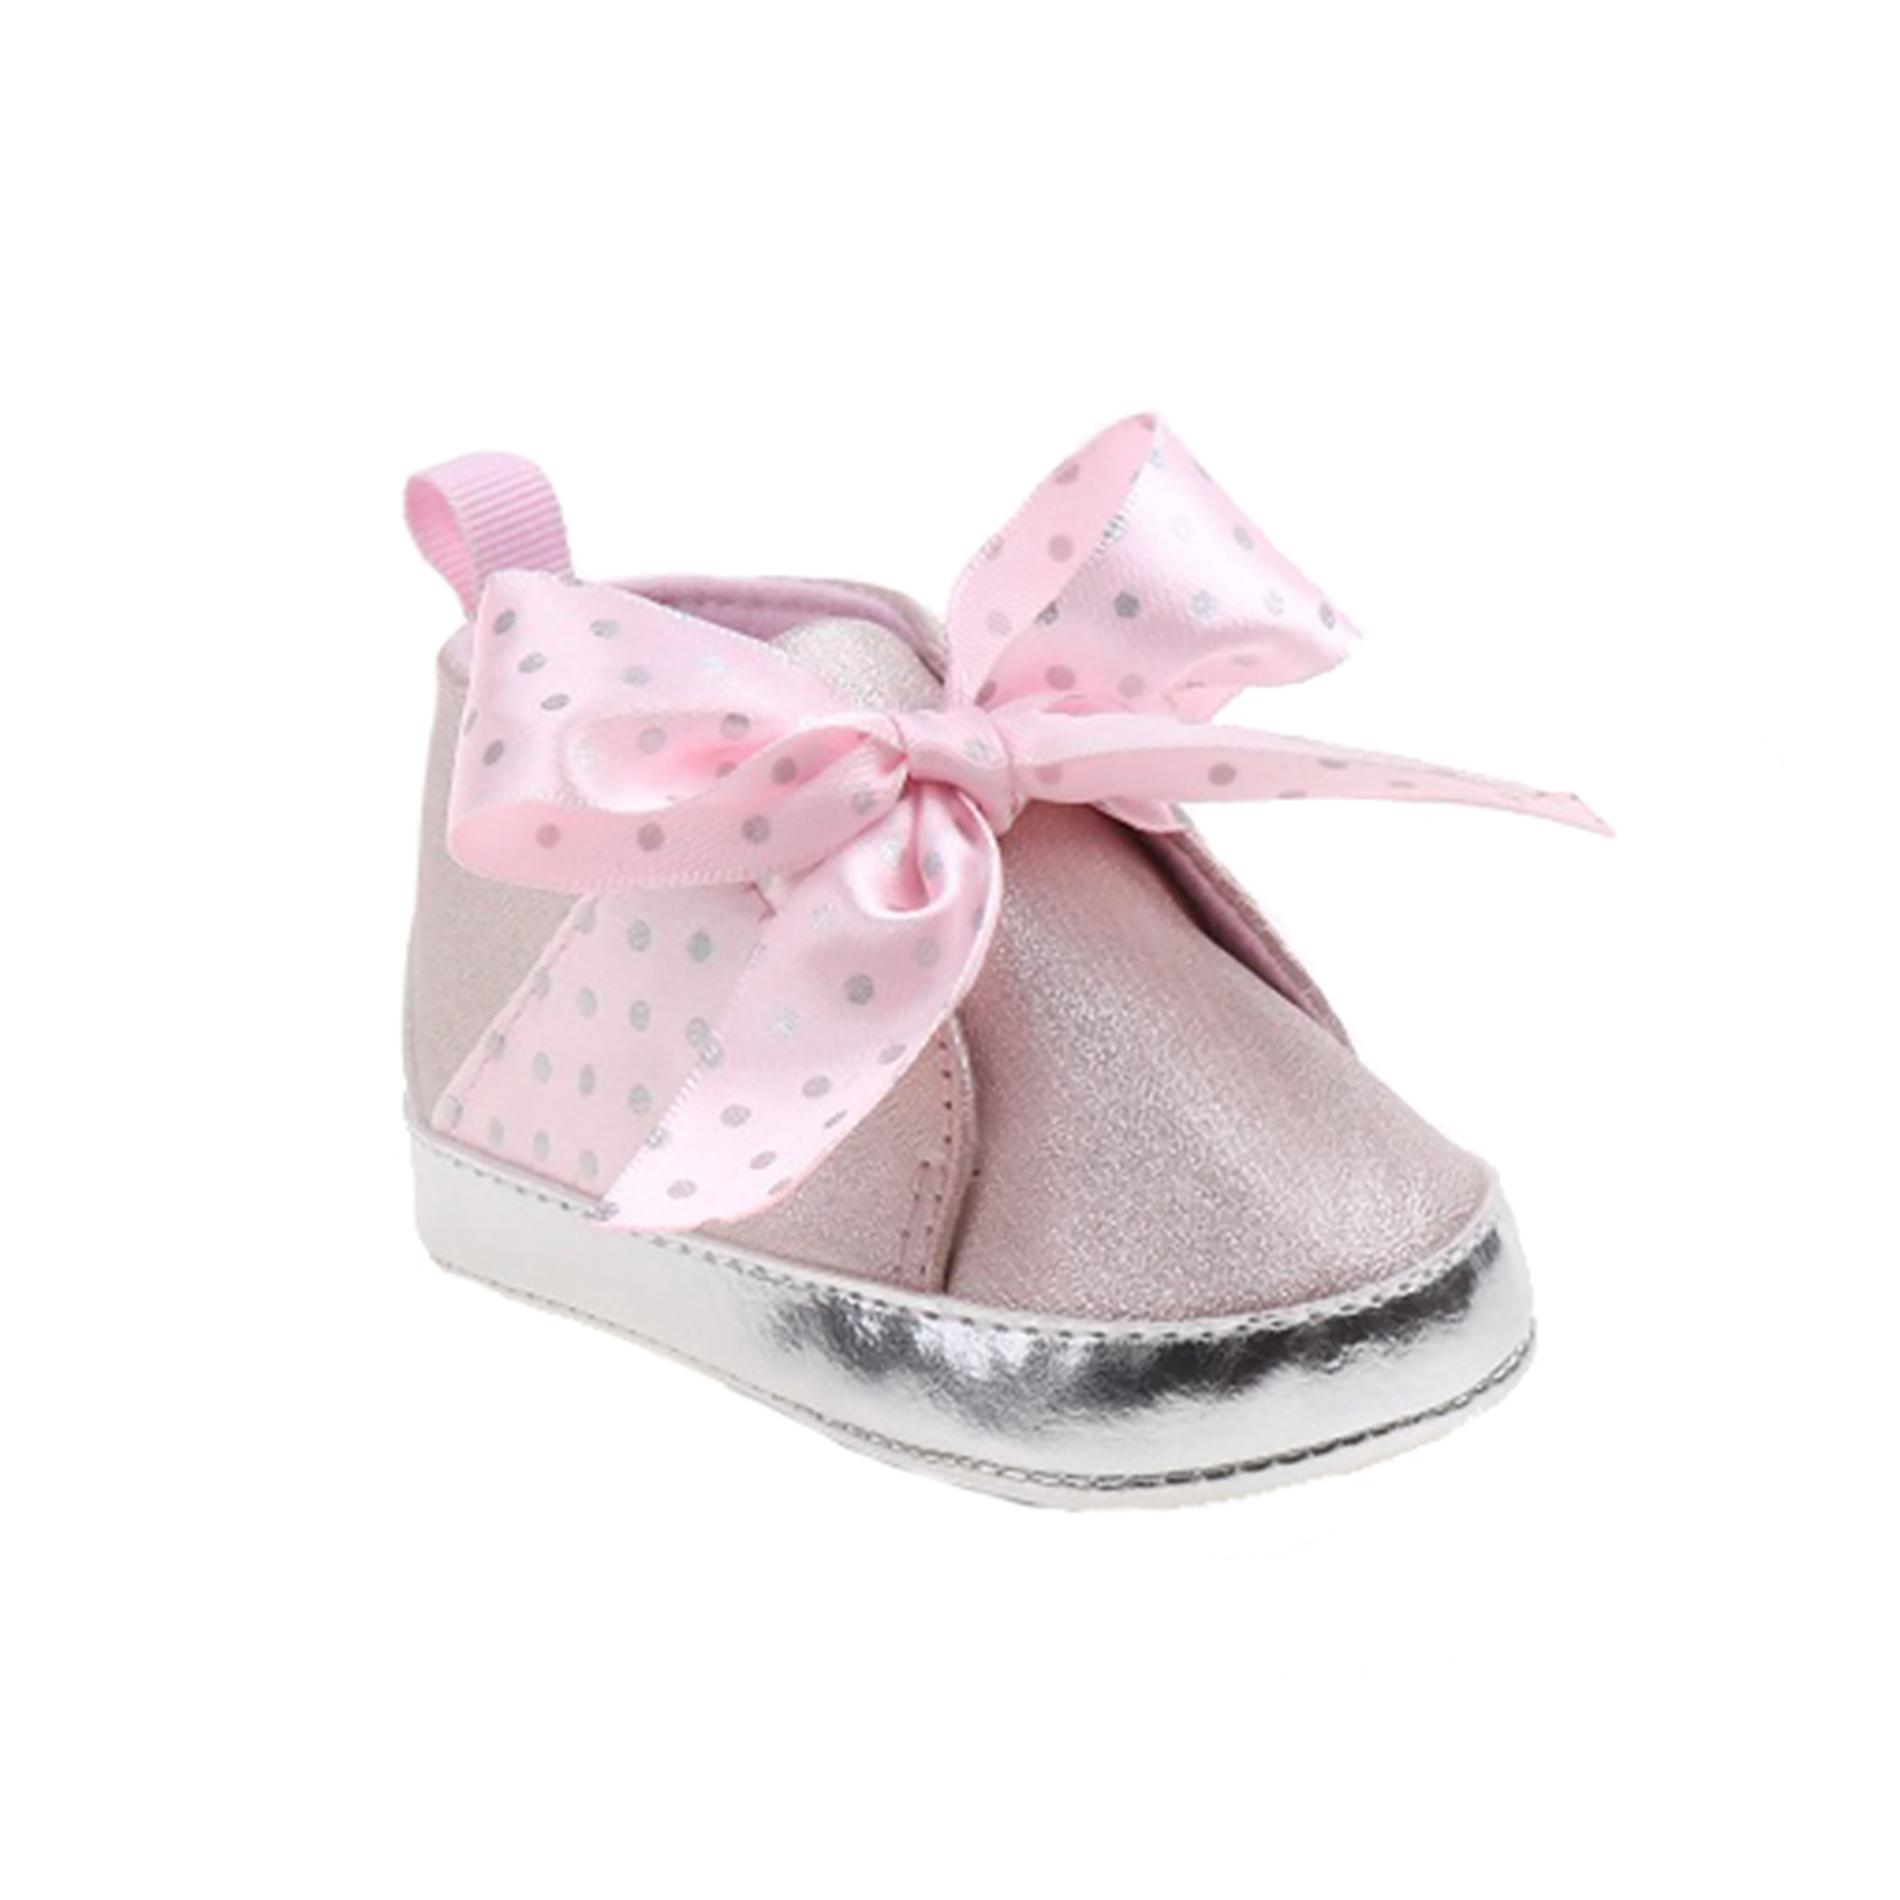 Laura Ashley Baby Girls' Fashion Shoe - Pink